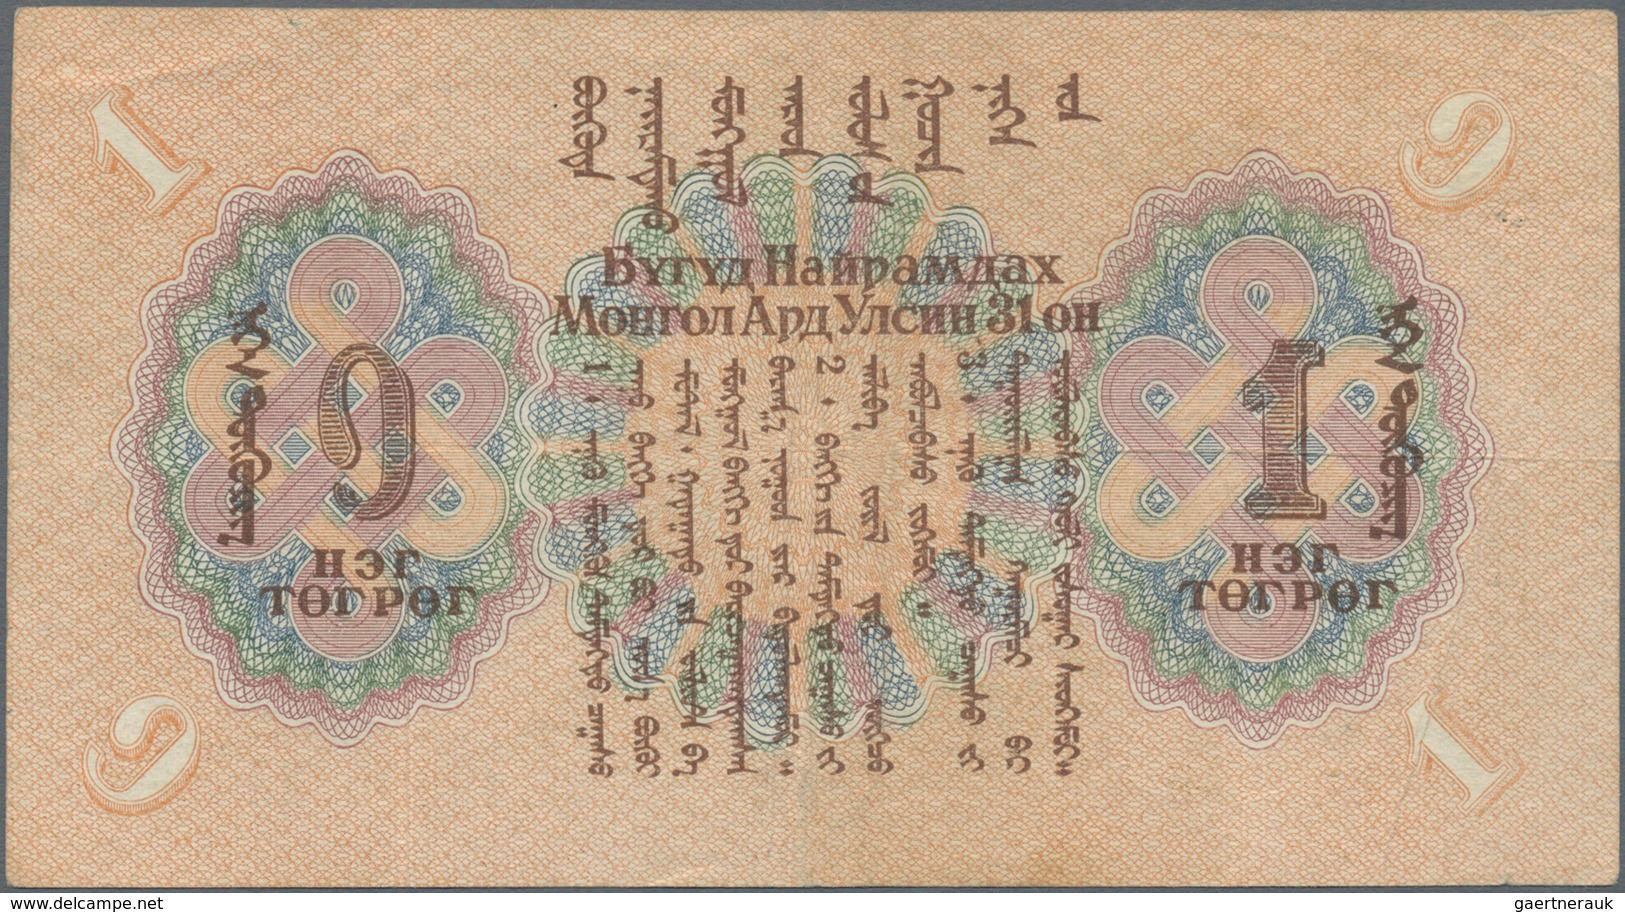 Mongolia / Mongolei: 1 Tugrik 1941, P.21, Very Nice Note With Crisp Paper, Some Minor Spots, Graffit - Mongolei